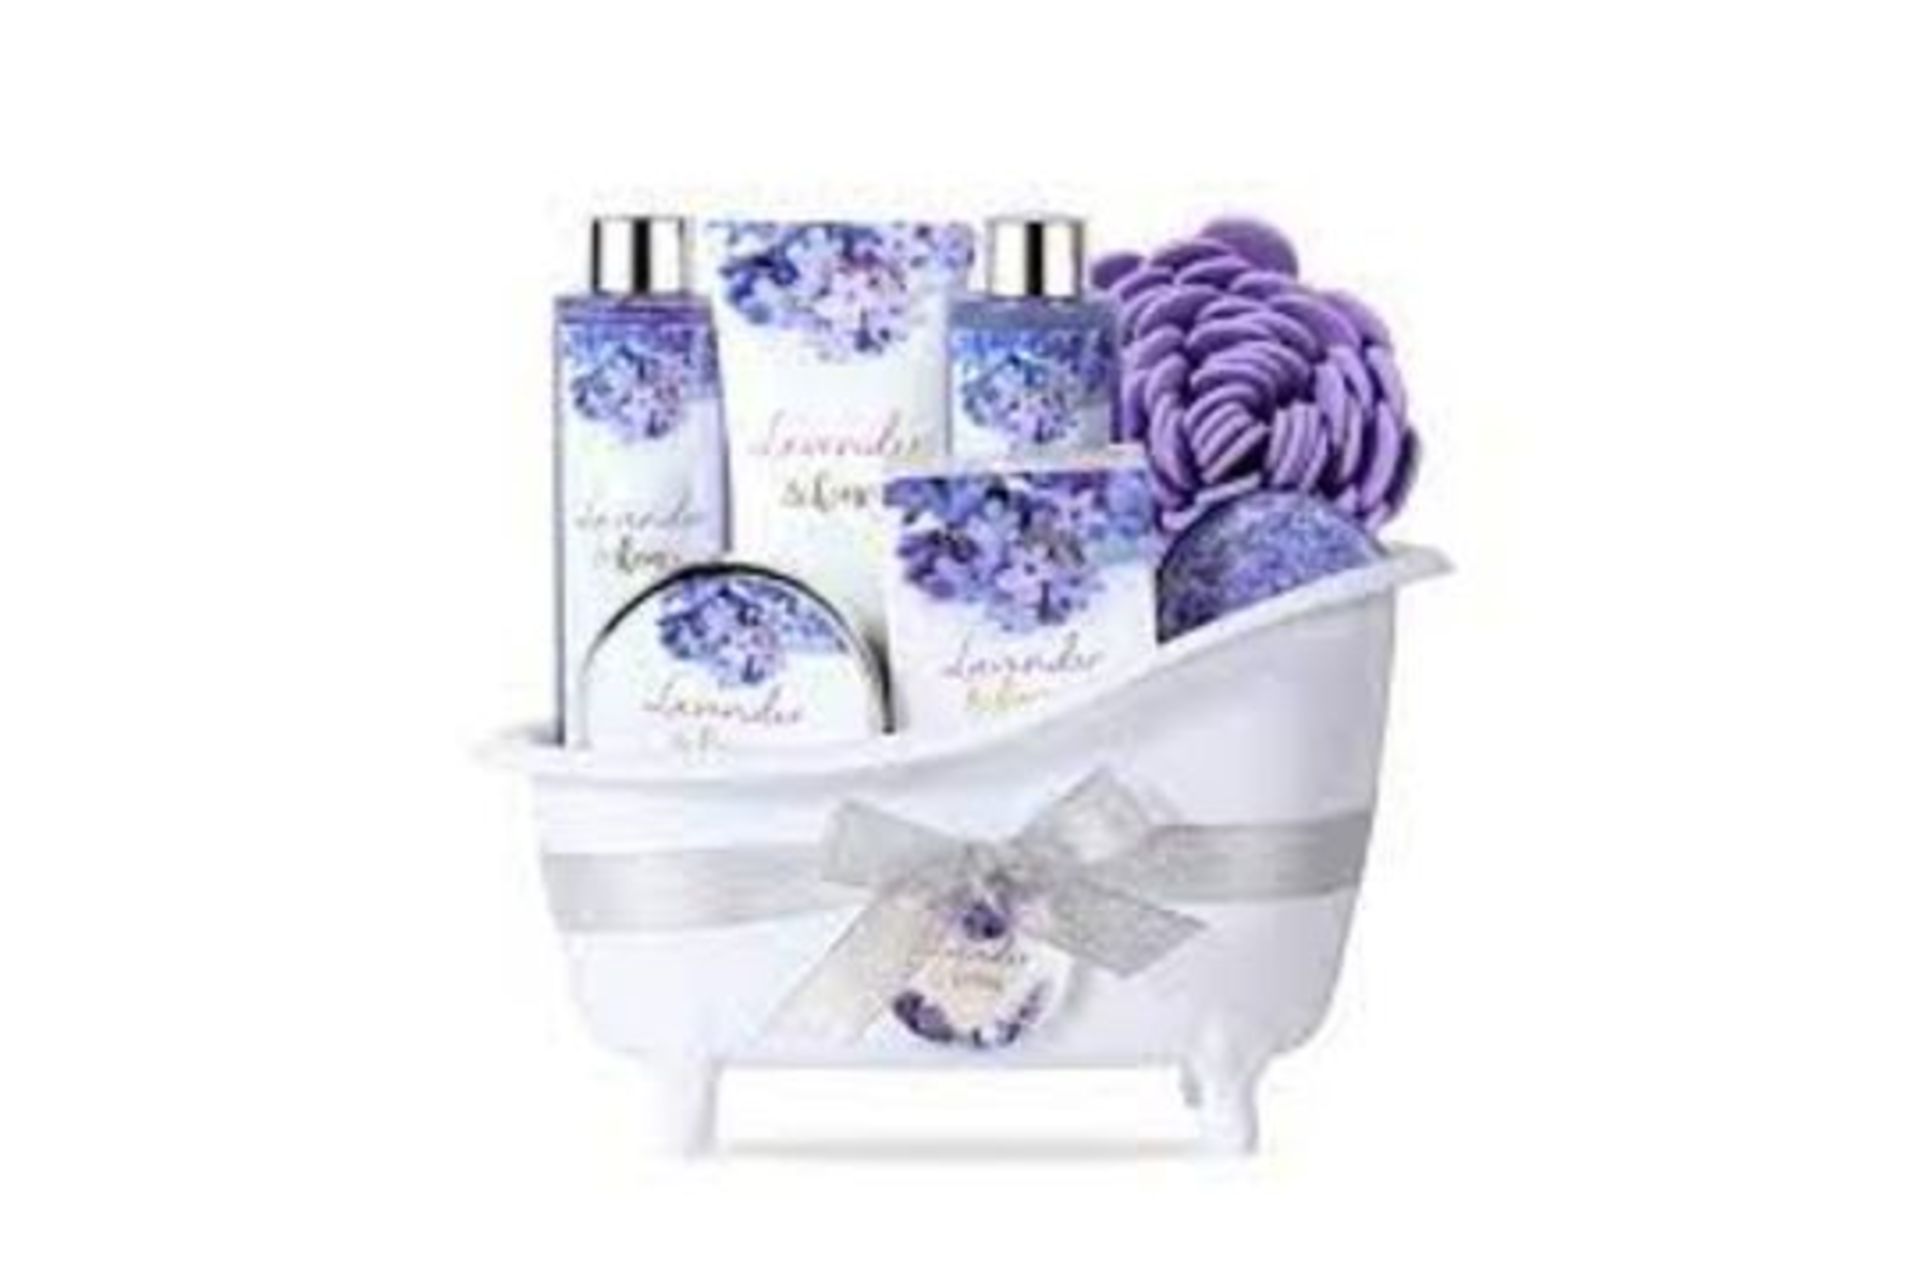 3 x NEW PACKAGED BODY & EARTH Lavender & Honey Spa Bathtub Set. (ROW12) Contents: This bath set